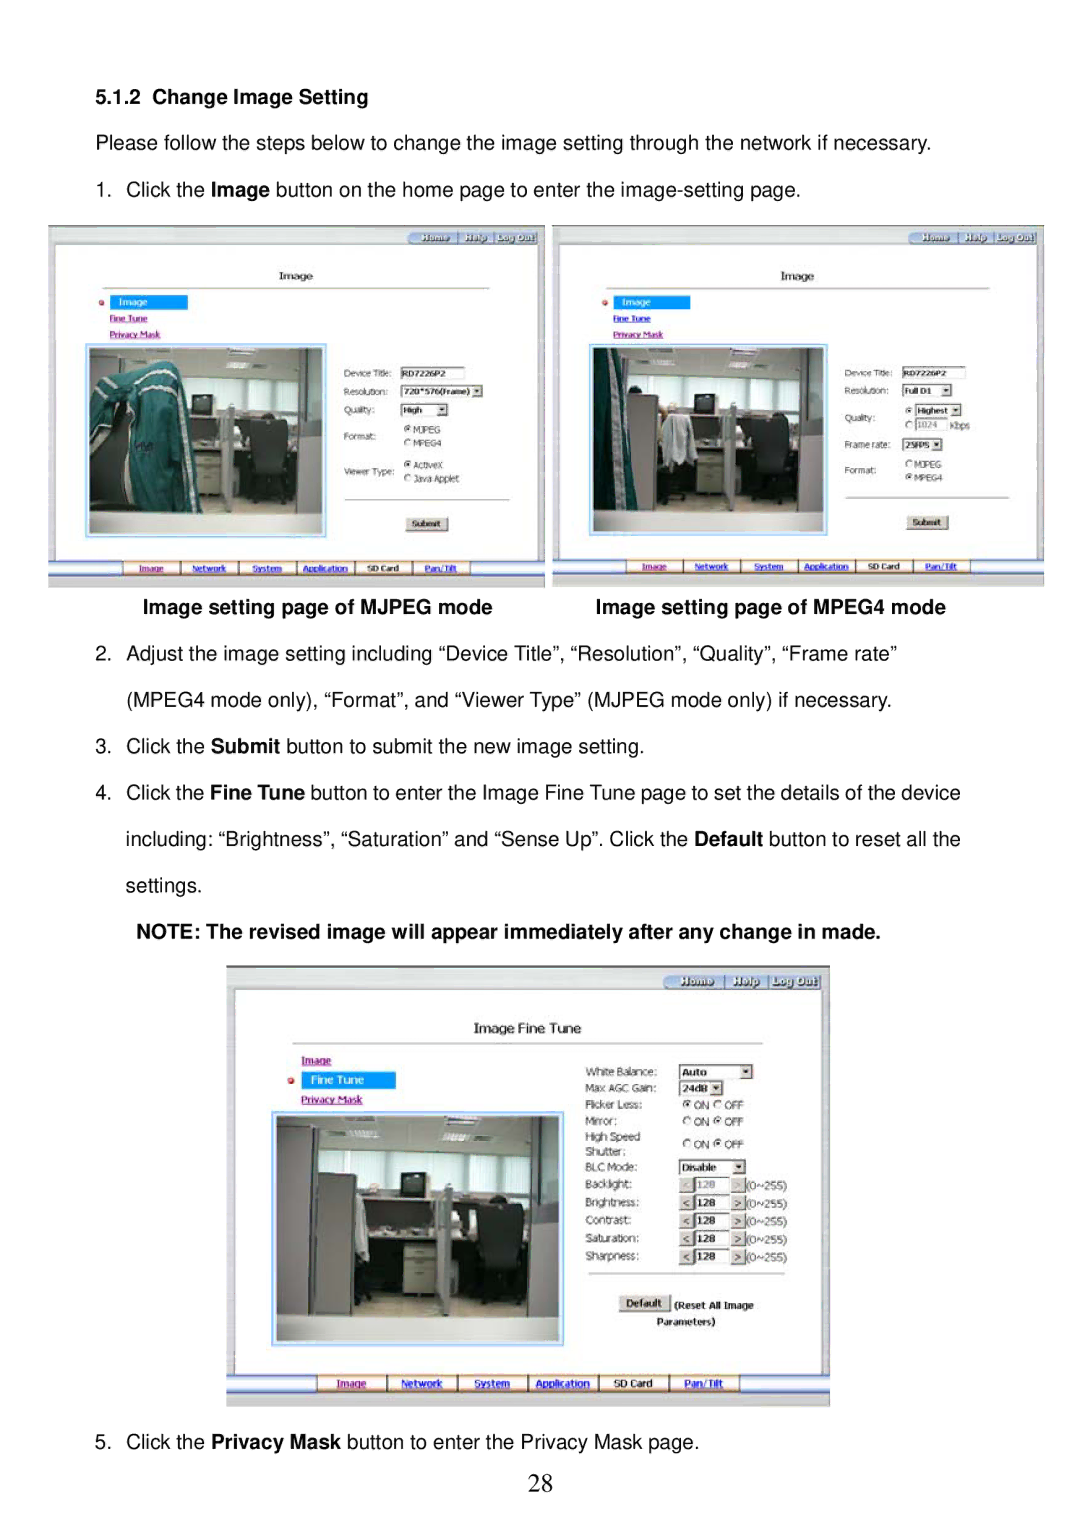 Sony MPEG4 LAN Camera operation manual Change Image Setting, Image setting page of Mjpeg mode 